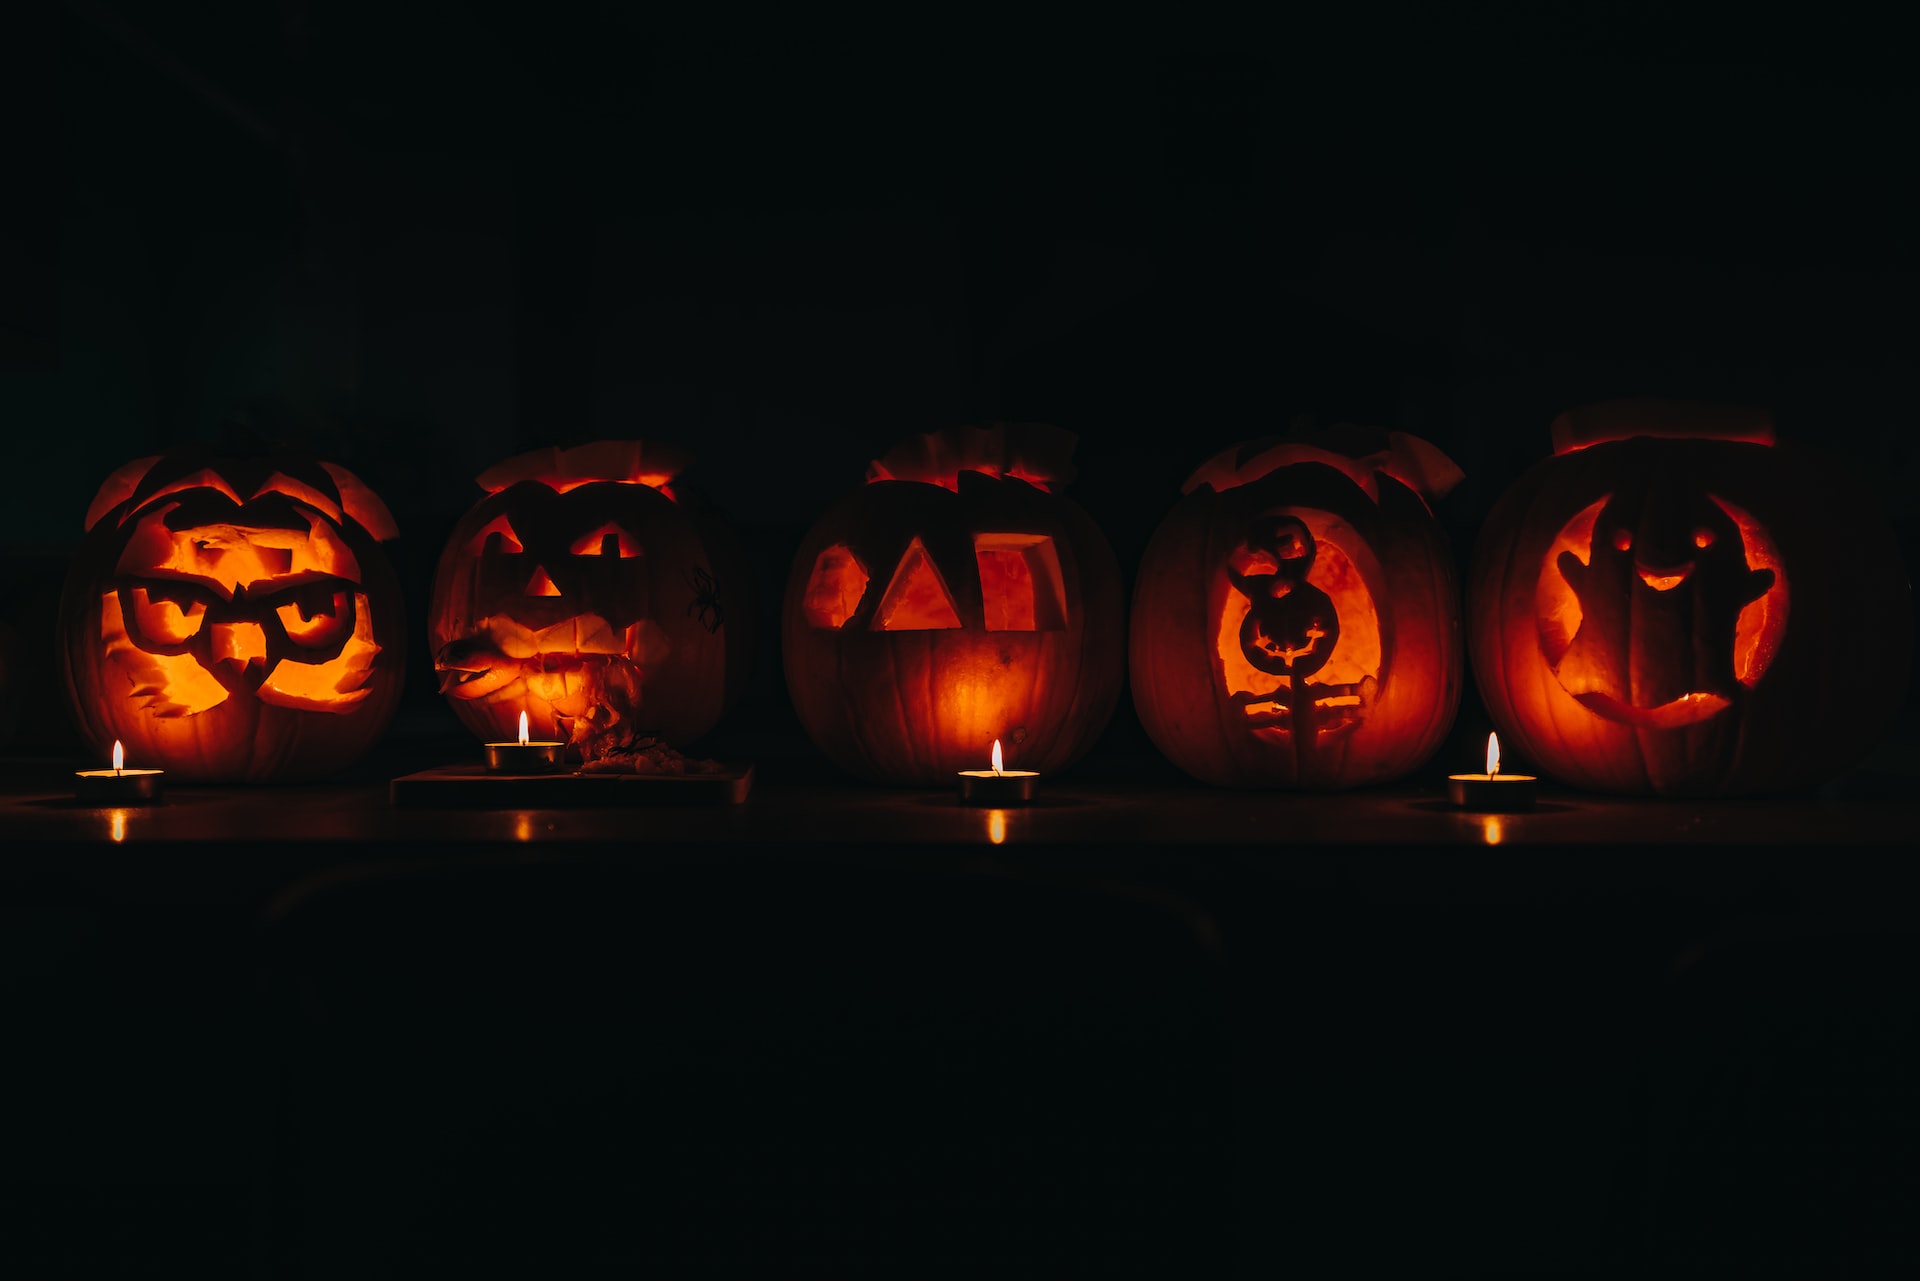 Five jack-o-lanterns in a row.